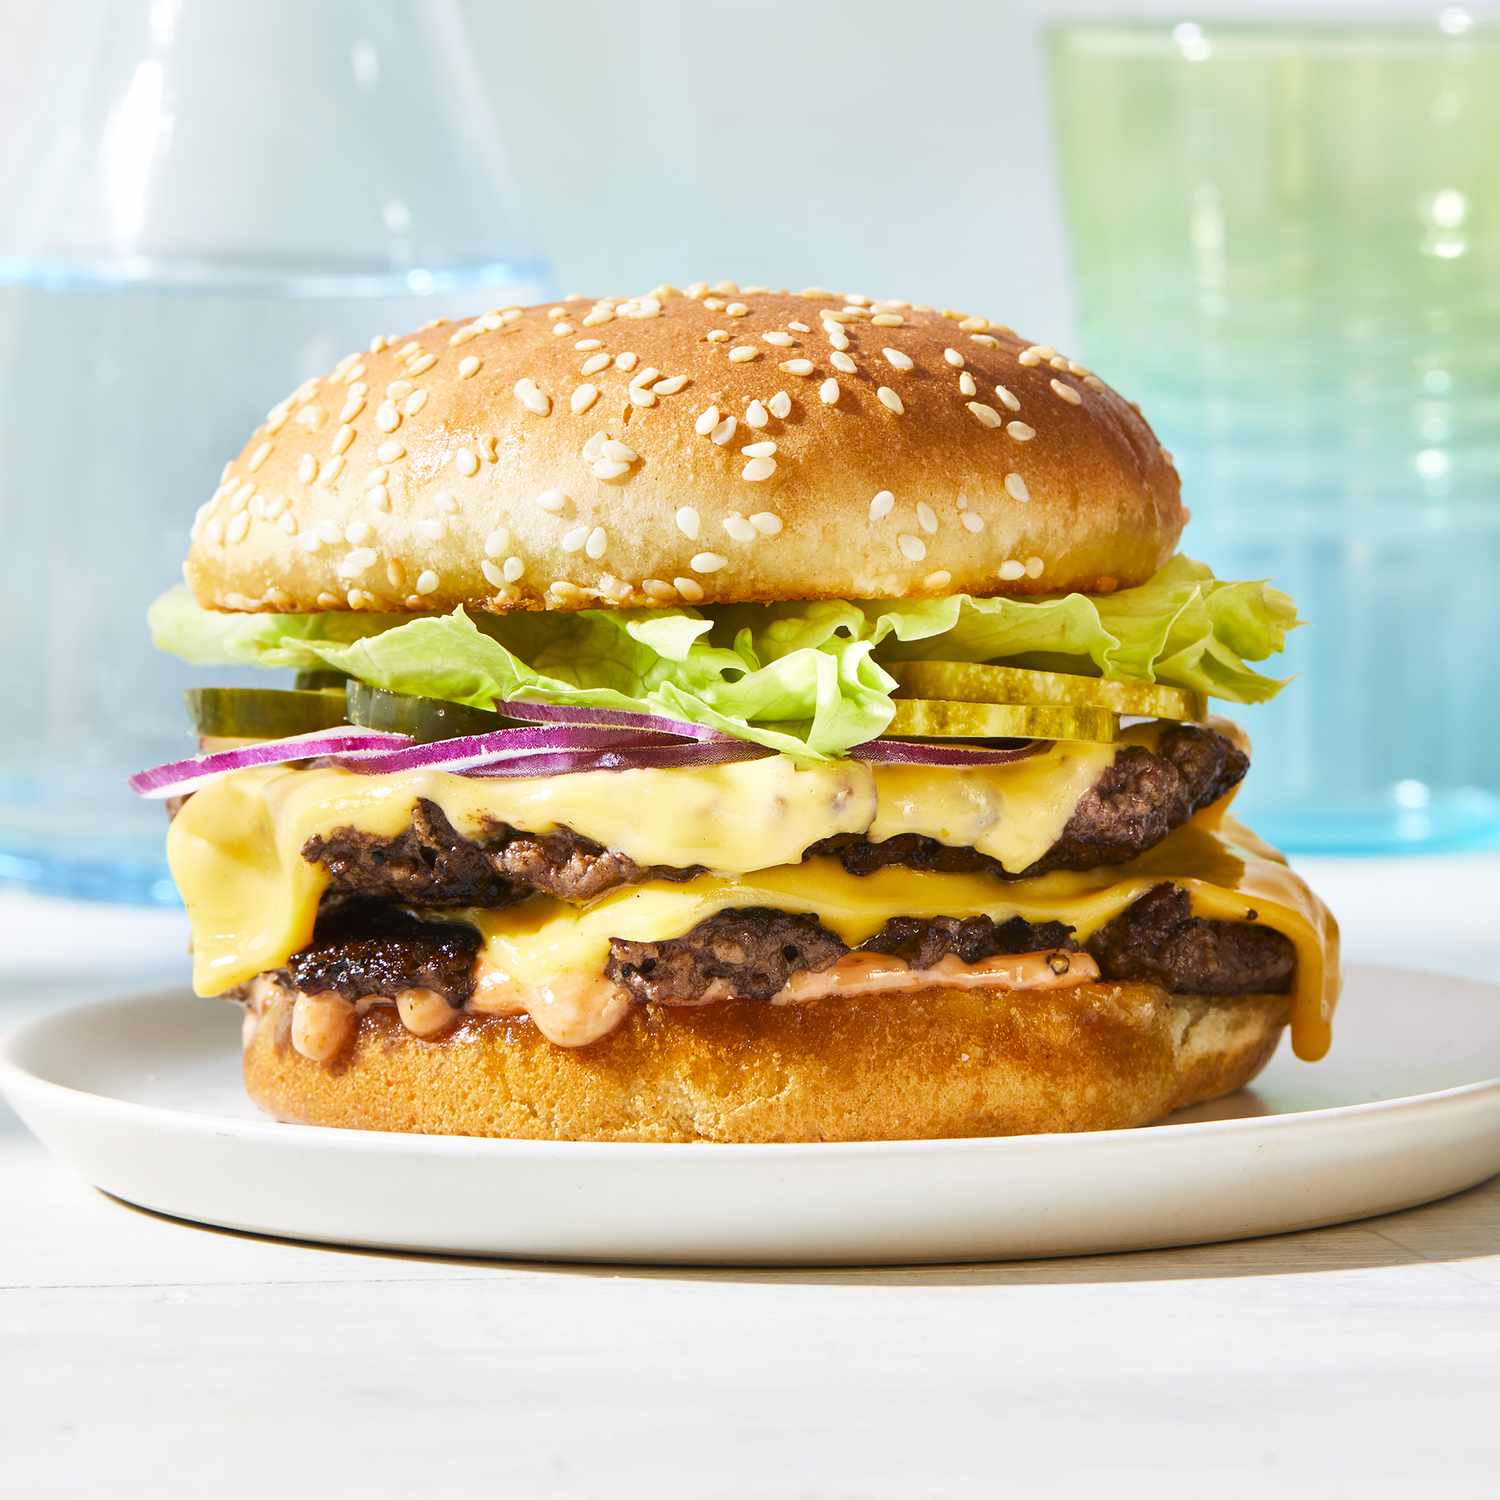 What Makes Smash Burgers Better Than Regular Burgers